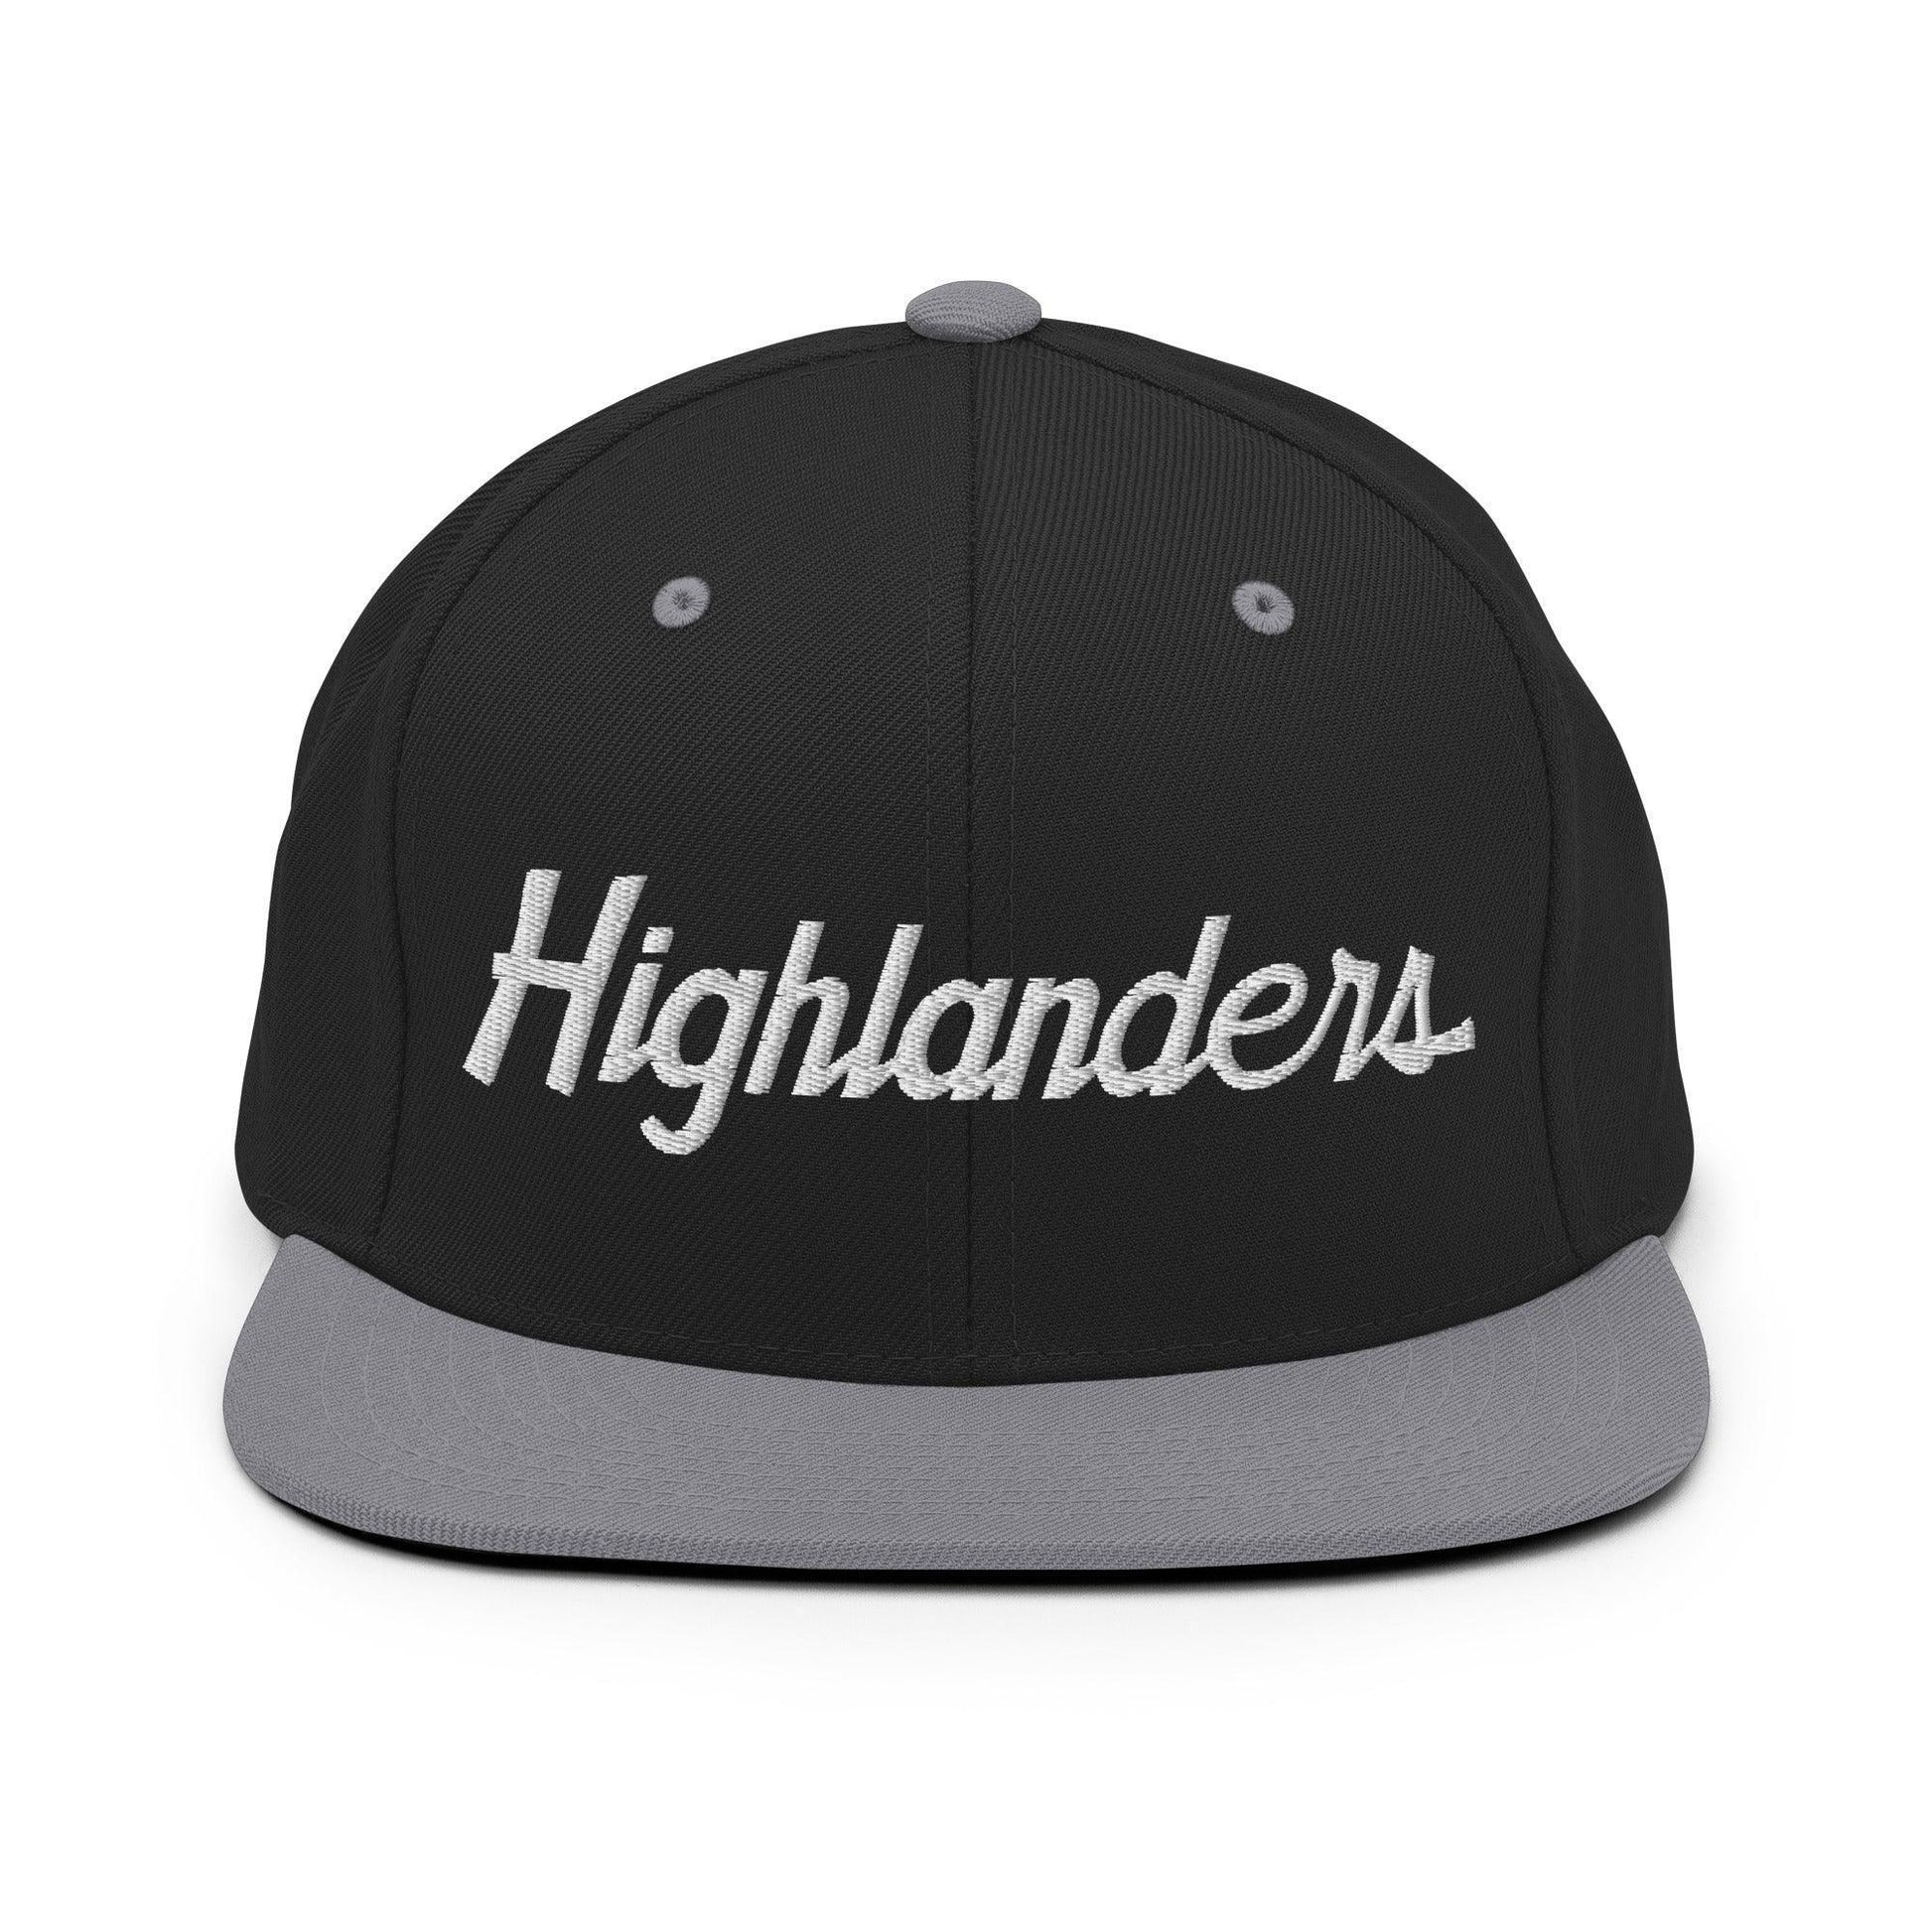 Highlanders School Mascot Script Snapback Hat Black/ Silver